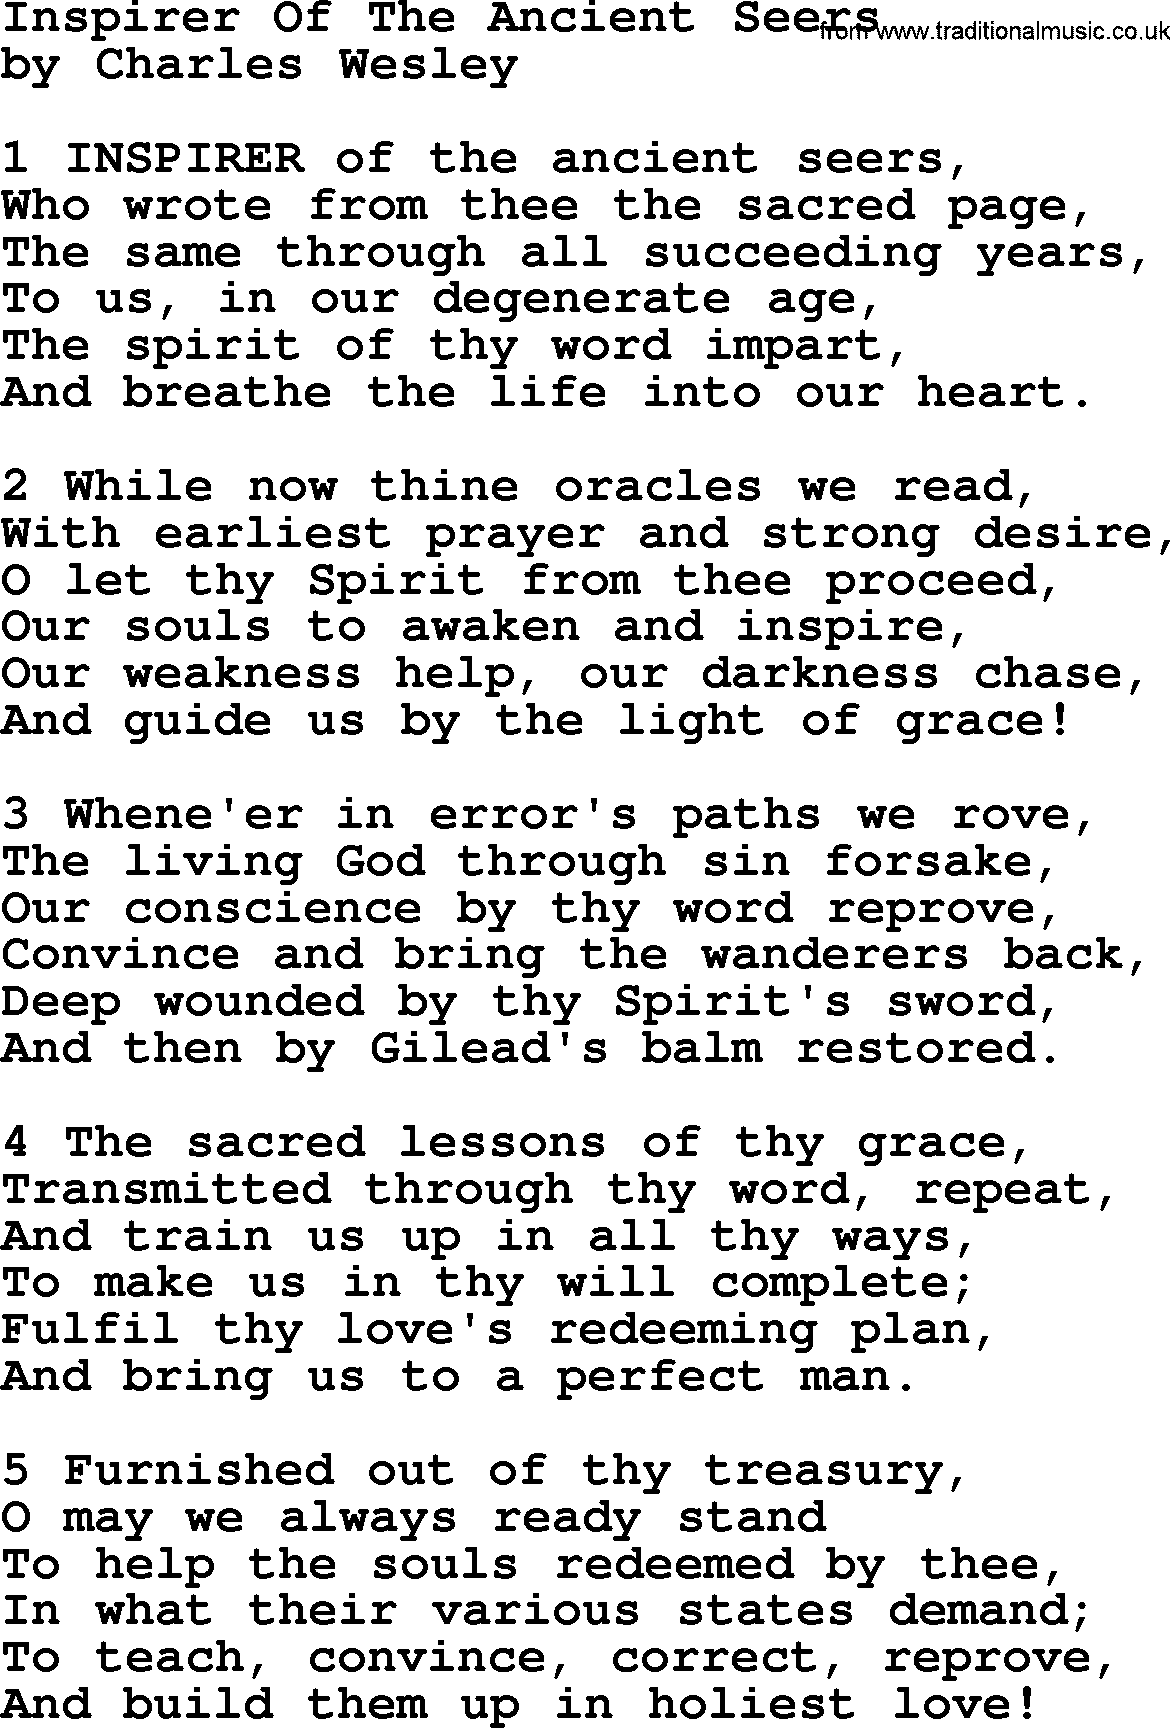 Charles Wesley hymn: Inspirer Of The Ancient Seers, lyrics